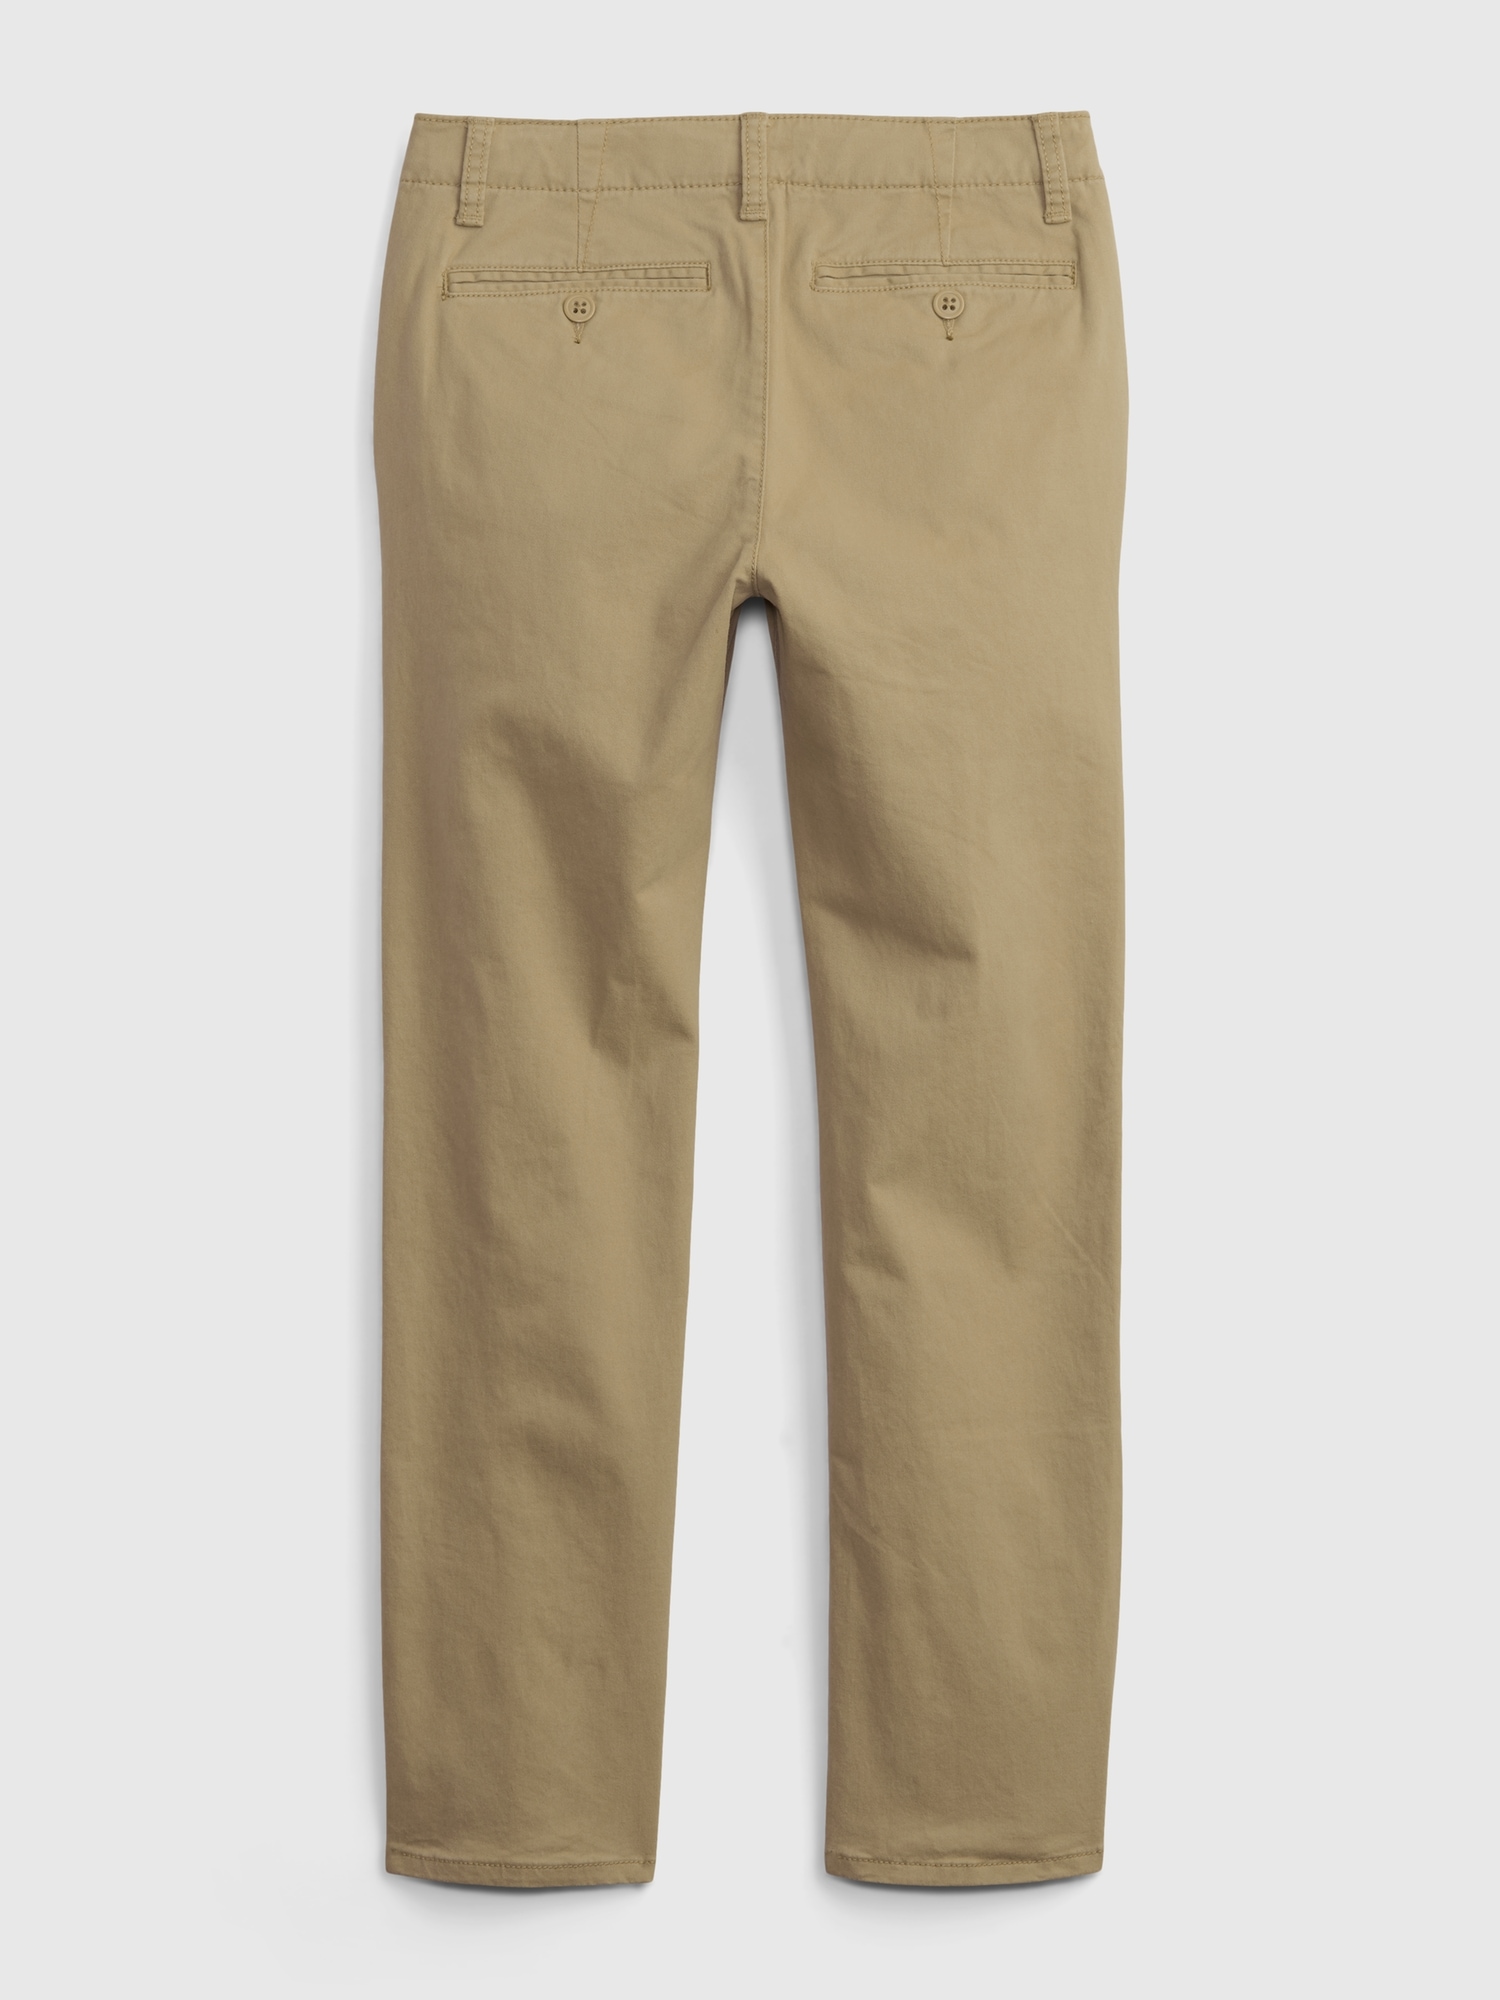 Canbebe Pants Size 6 - Kids Emporium